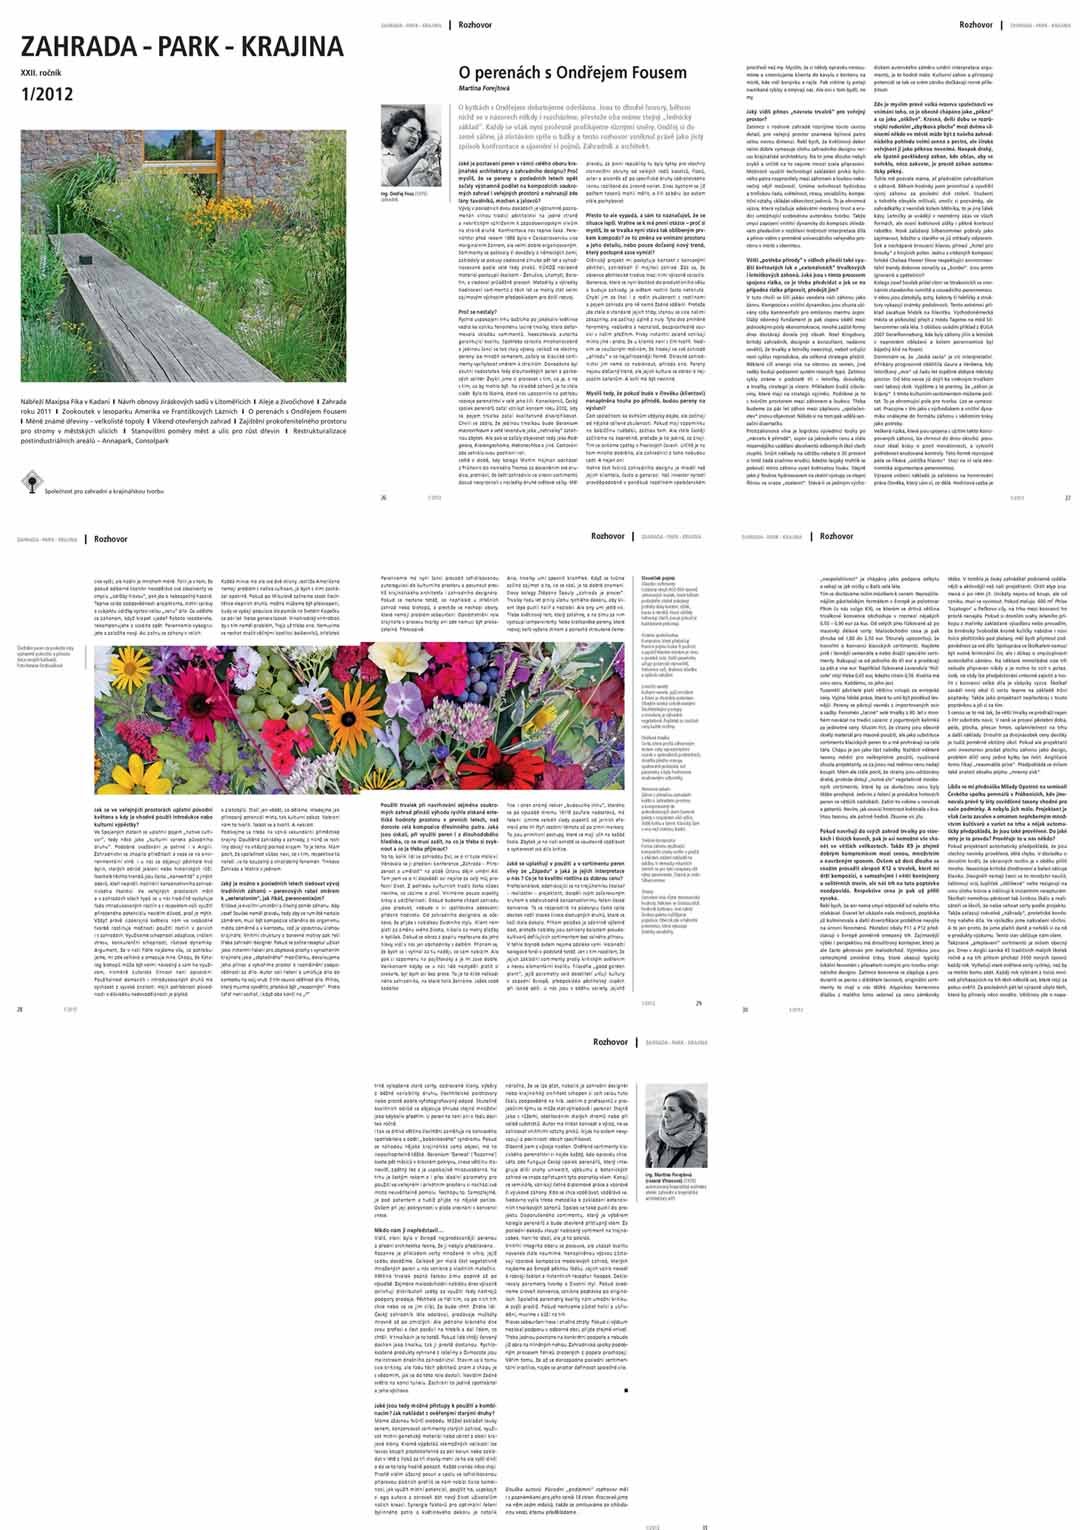 Zahrada-Park-Krajina 1/2012 - Gardener specialized in perennial plant Ondrej Fous interviewed by Martina Forejtova